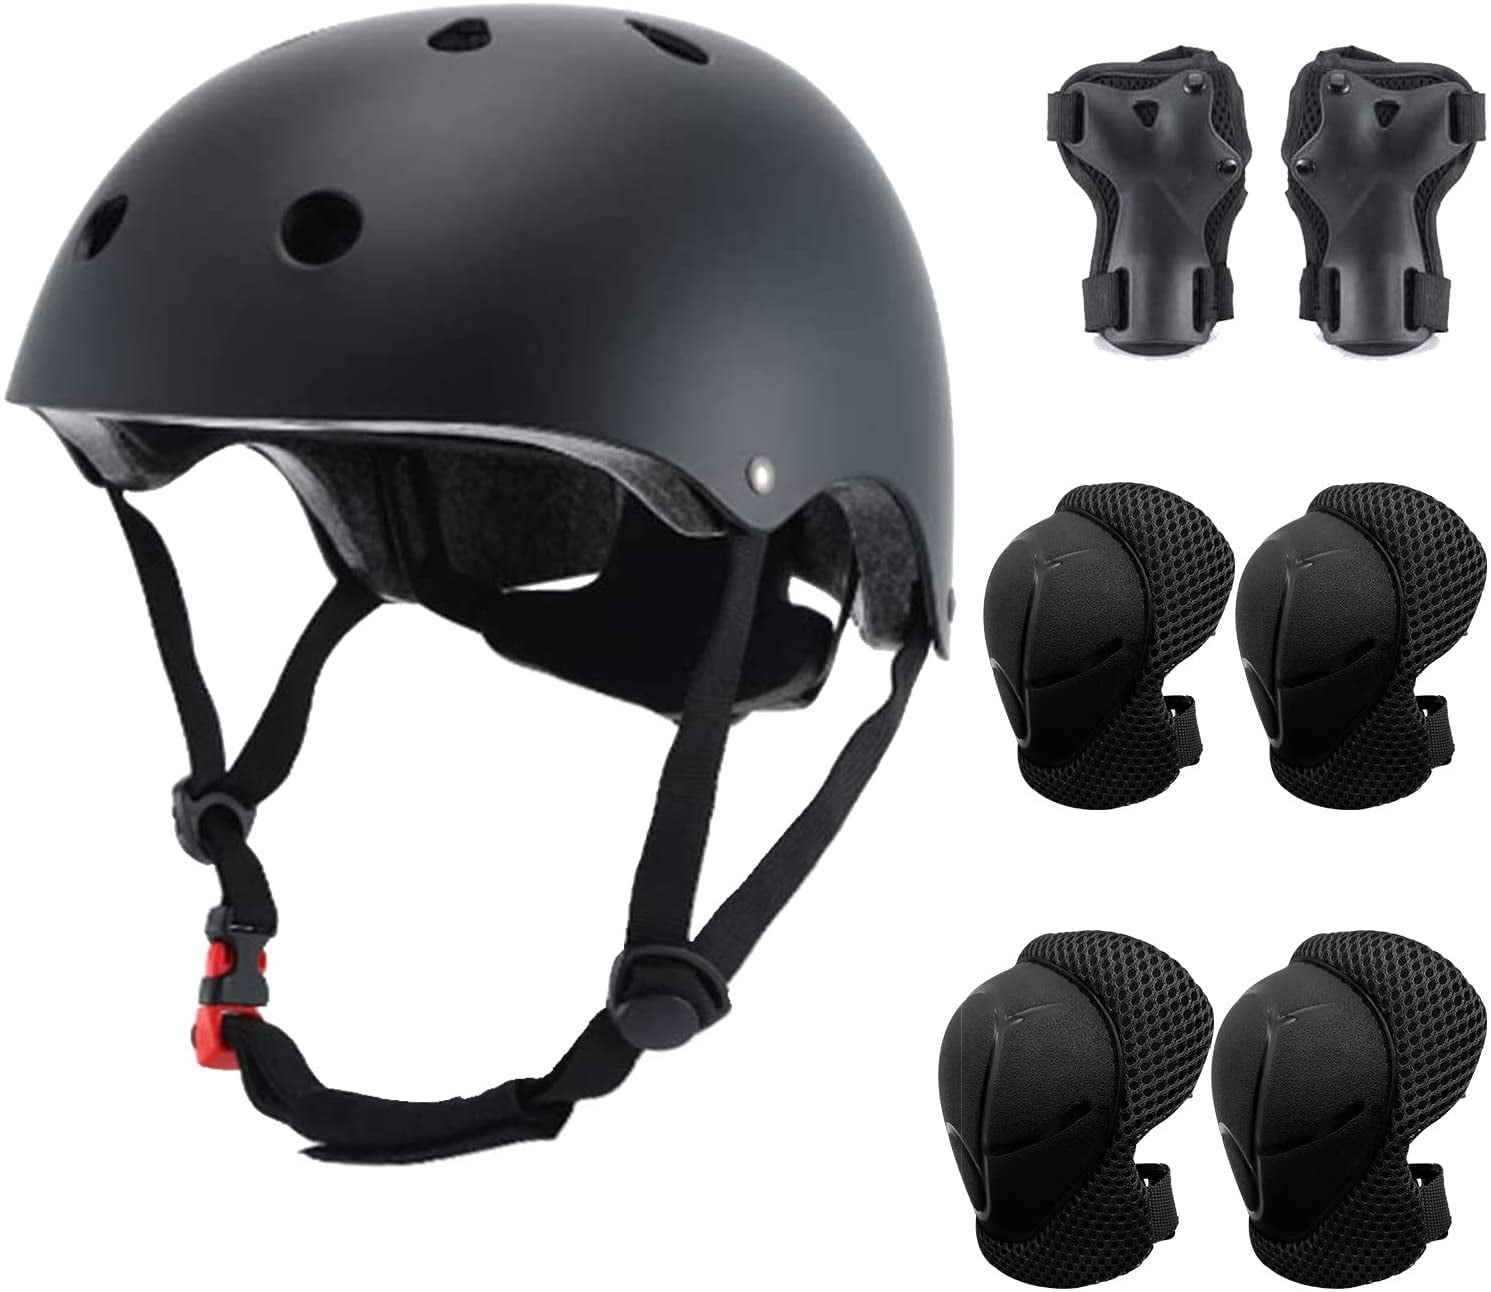 Adjustable Safety Kids Helmet Bike Bicycle Skate Board Scooter Head Protective 